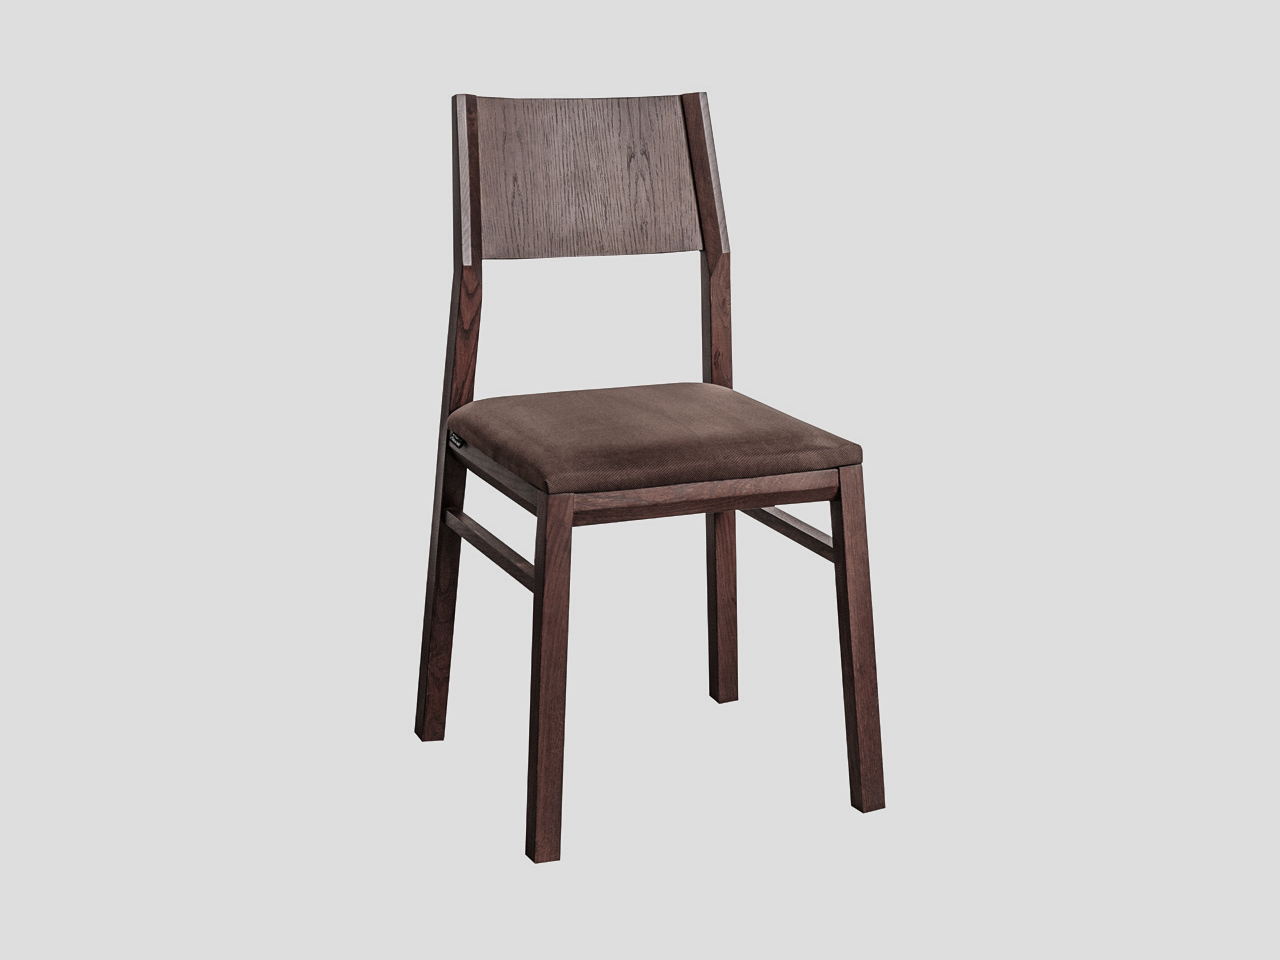 Moderna tapacirana stolica od drveta sa tapaciranim sedistem LANA Linea Milanovic